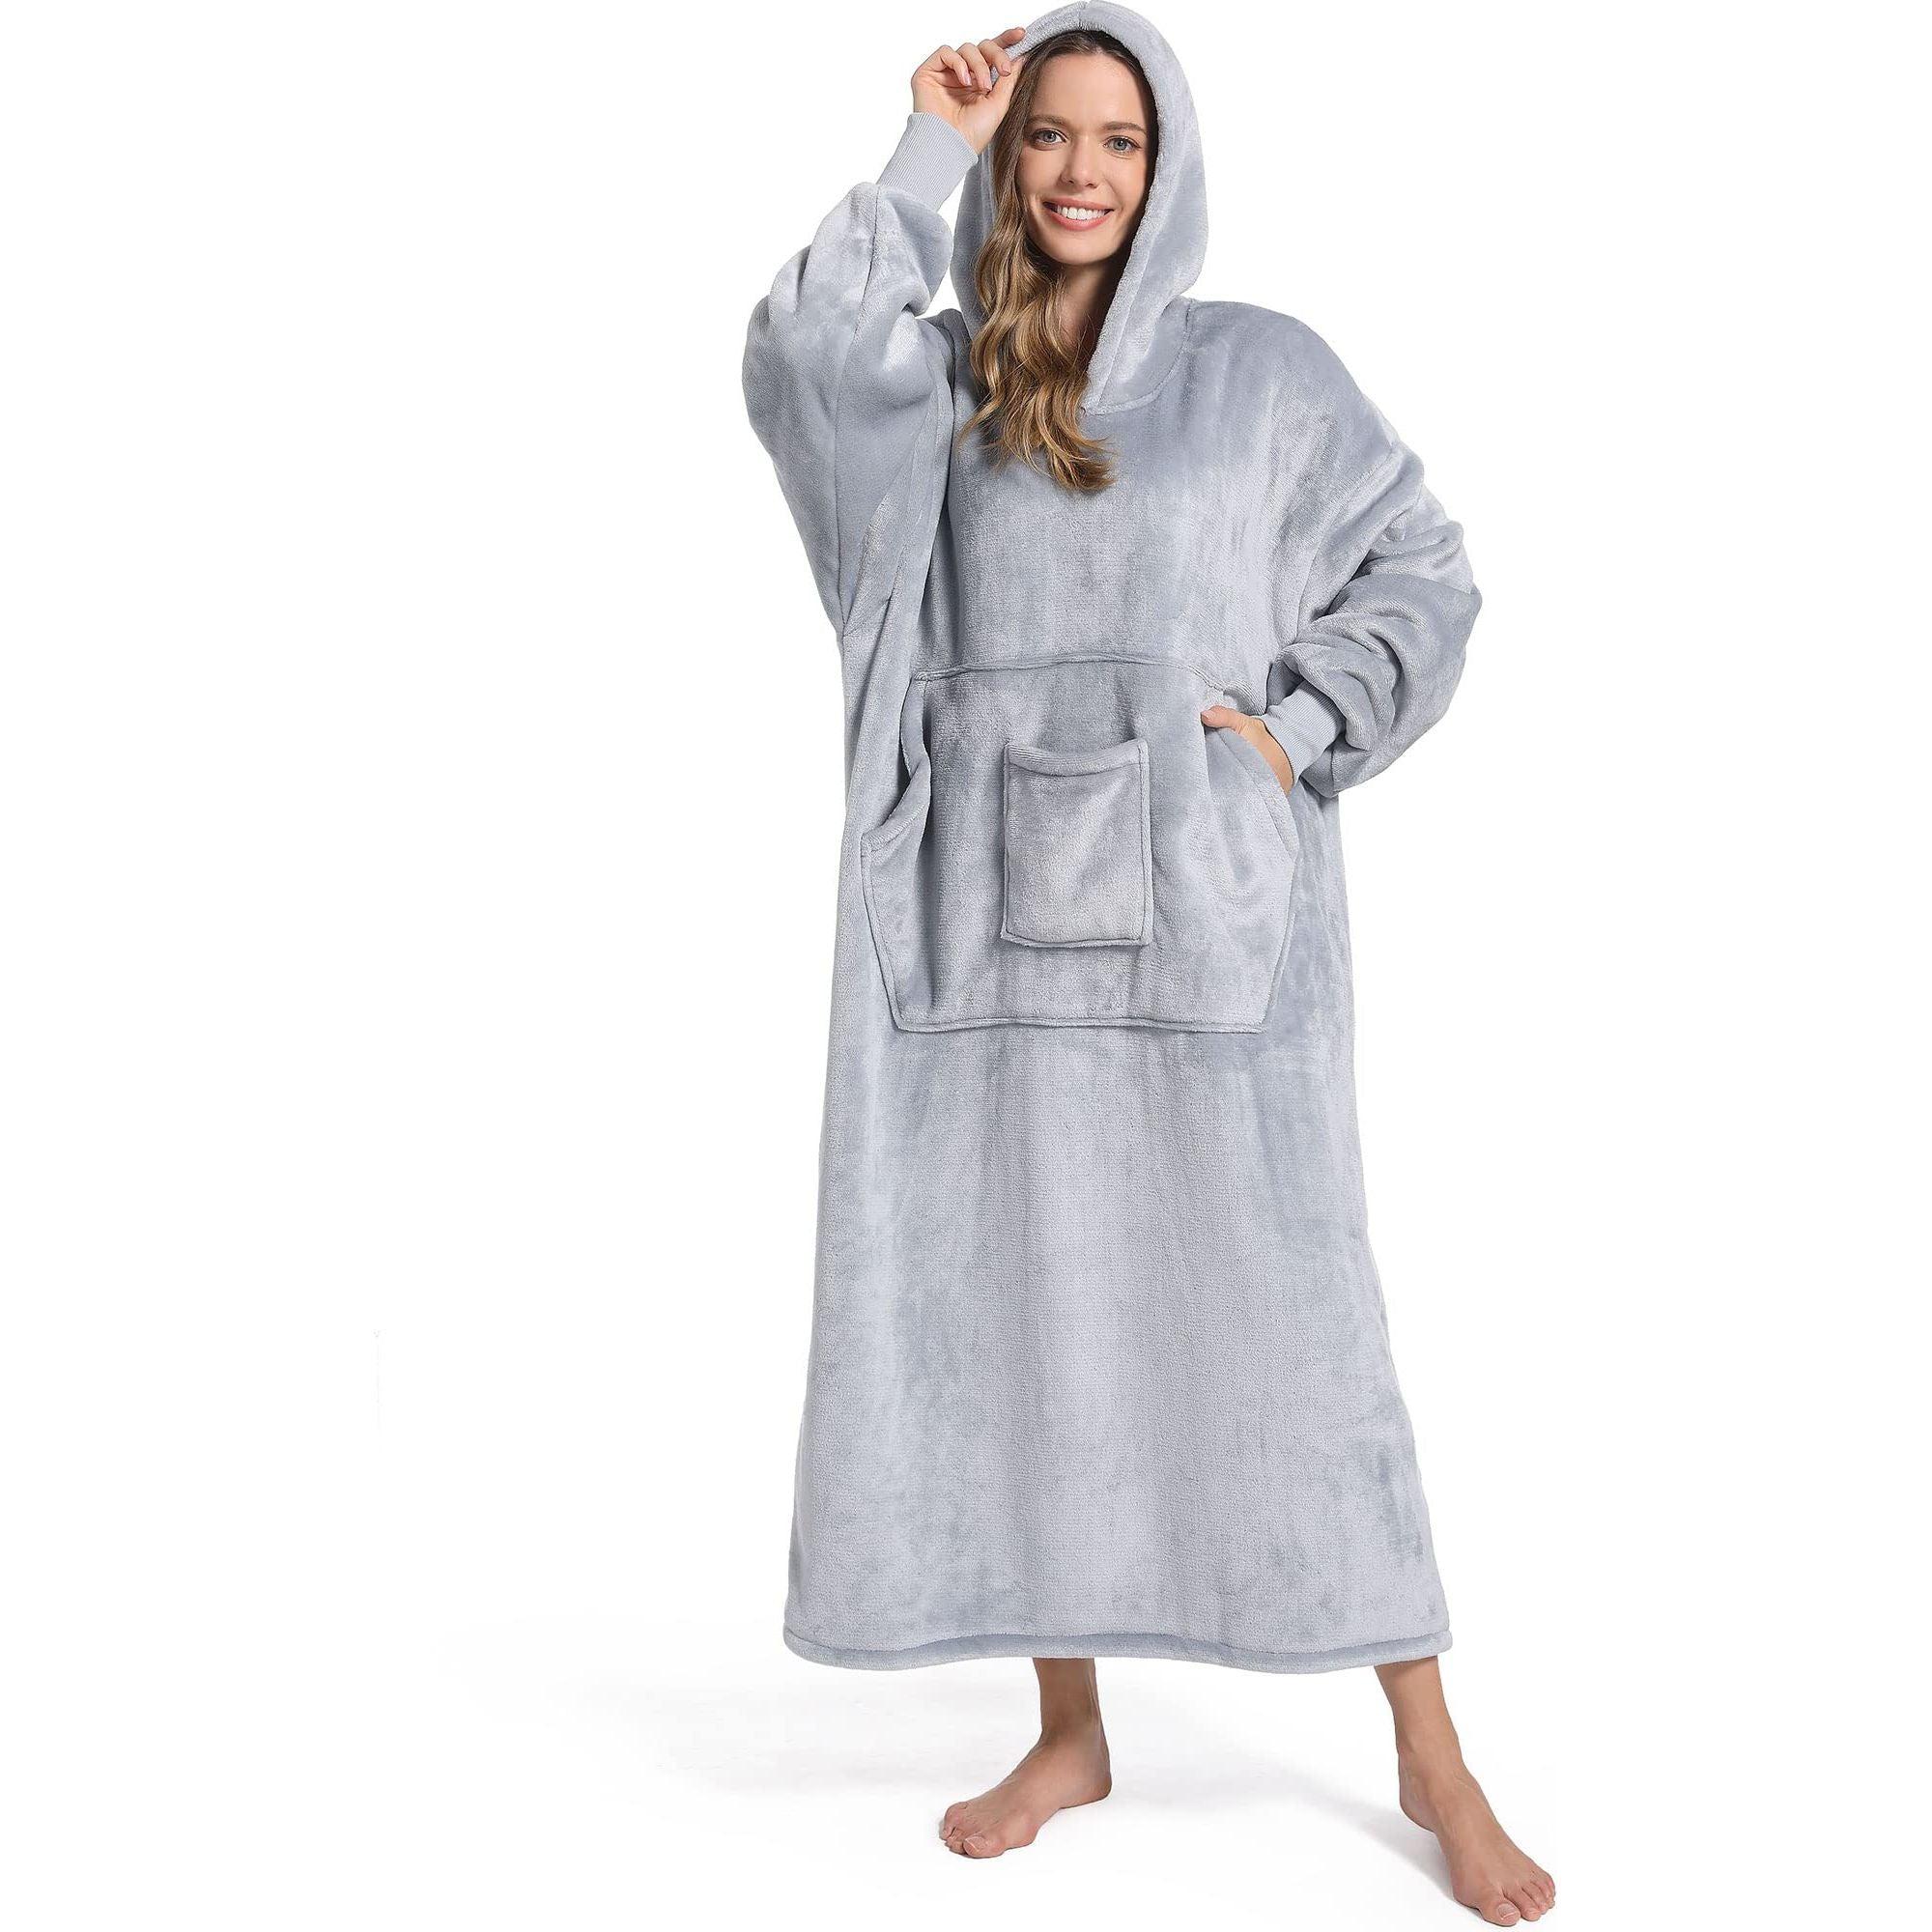 FUSSEDA Oversized Wearable Blanket Sweatshirt,Super Thick Warm Fleece Sherpa Cozy Blanket Hoodie with Pockets&Sleeves for Adult Kids 0